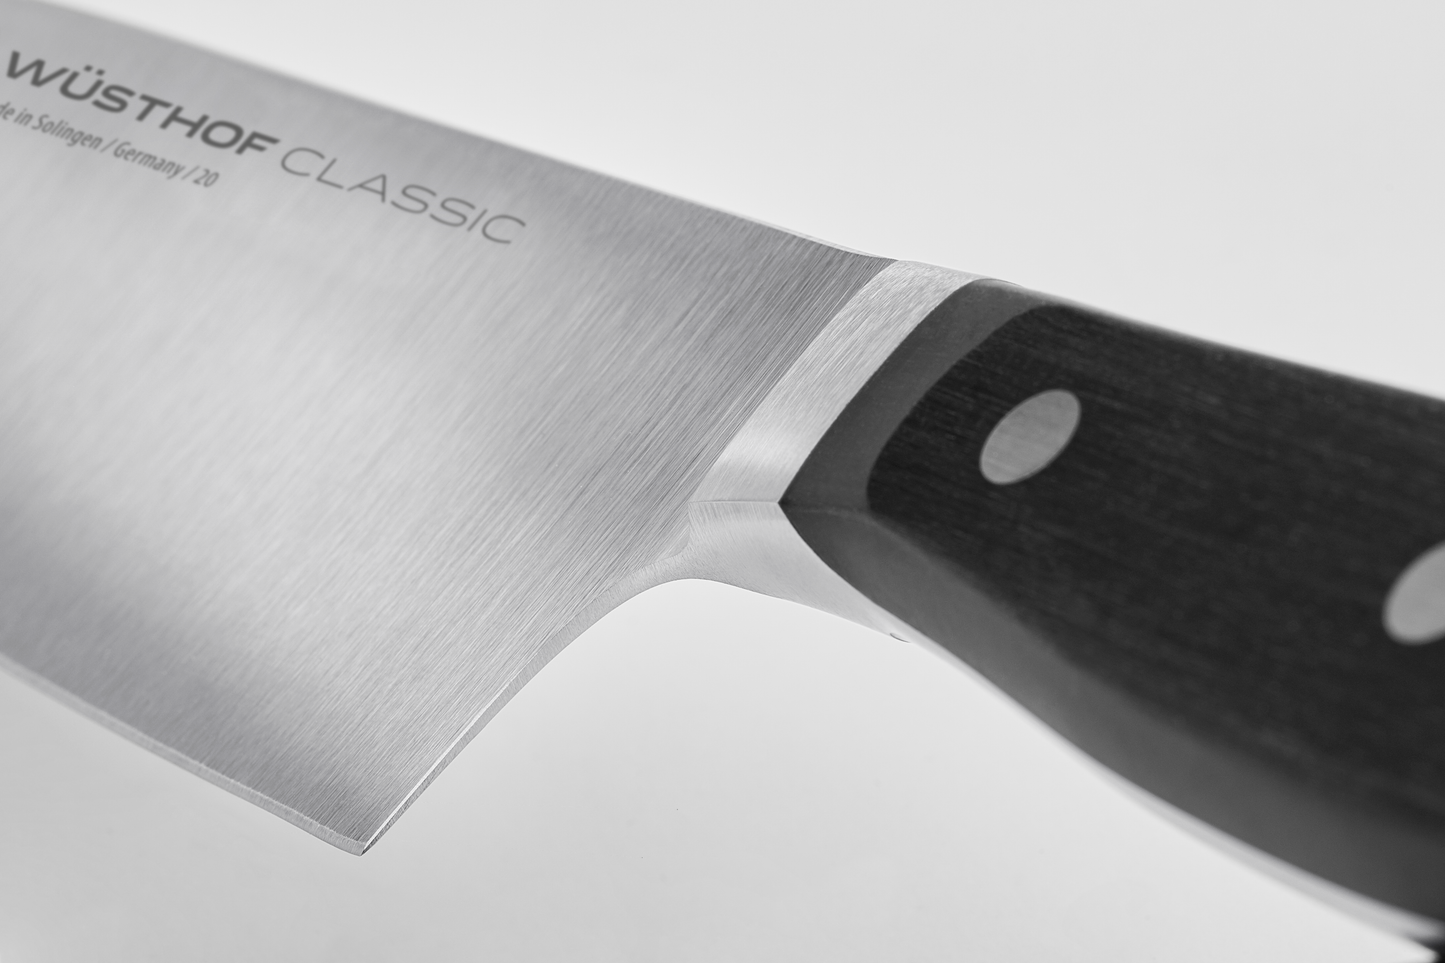 Classic Asian Utility Knife 12 cm | 4 1/2 inch